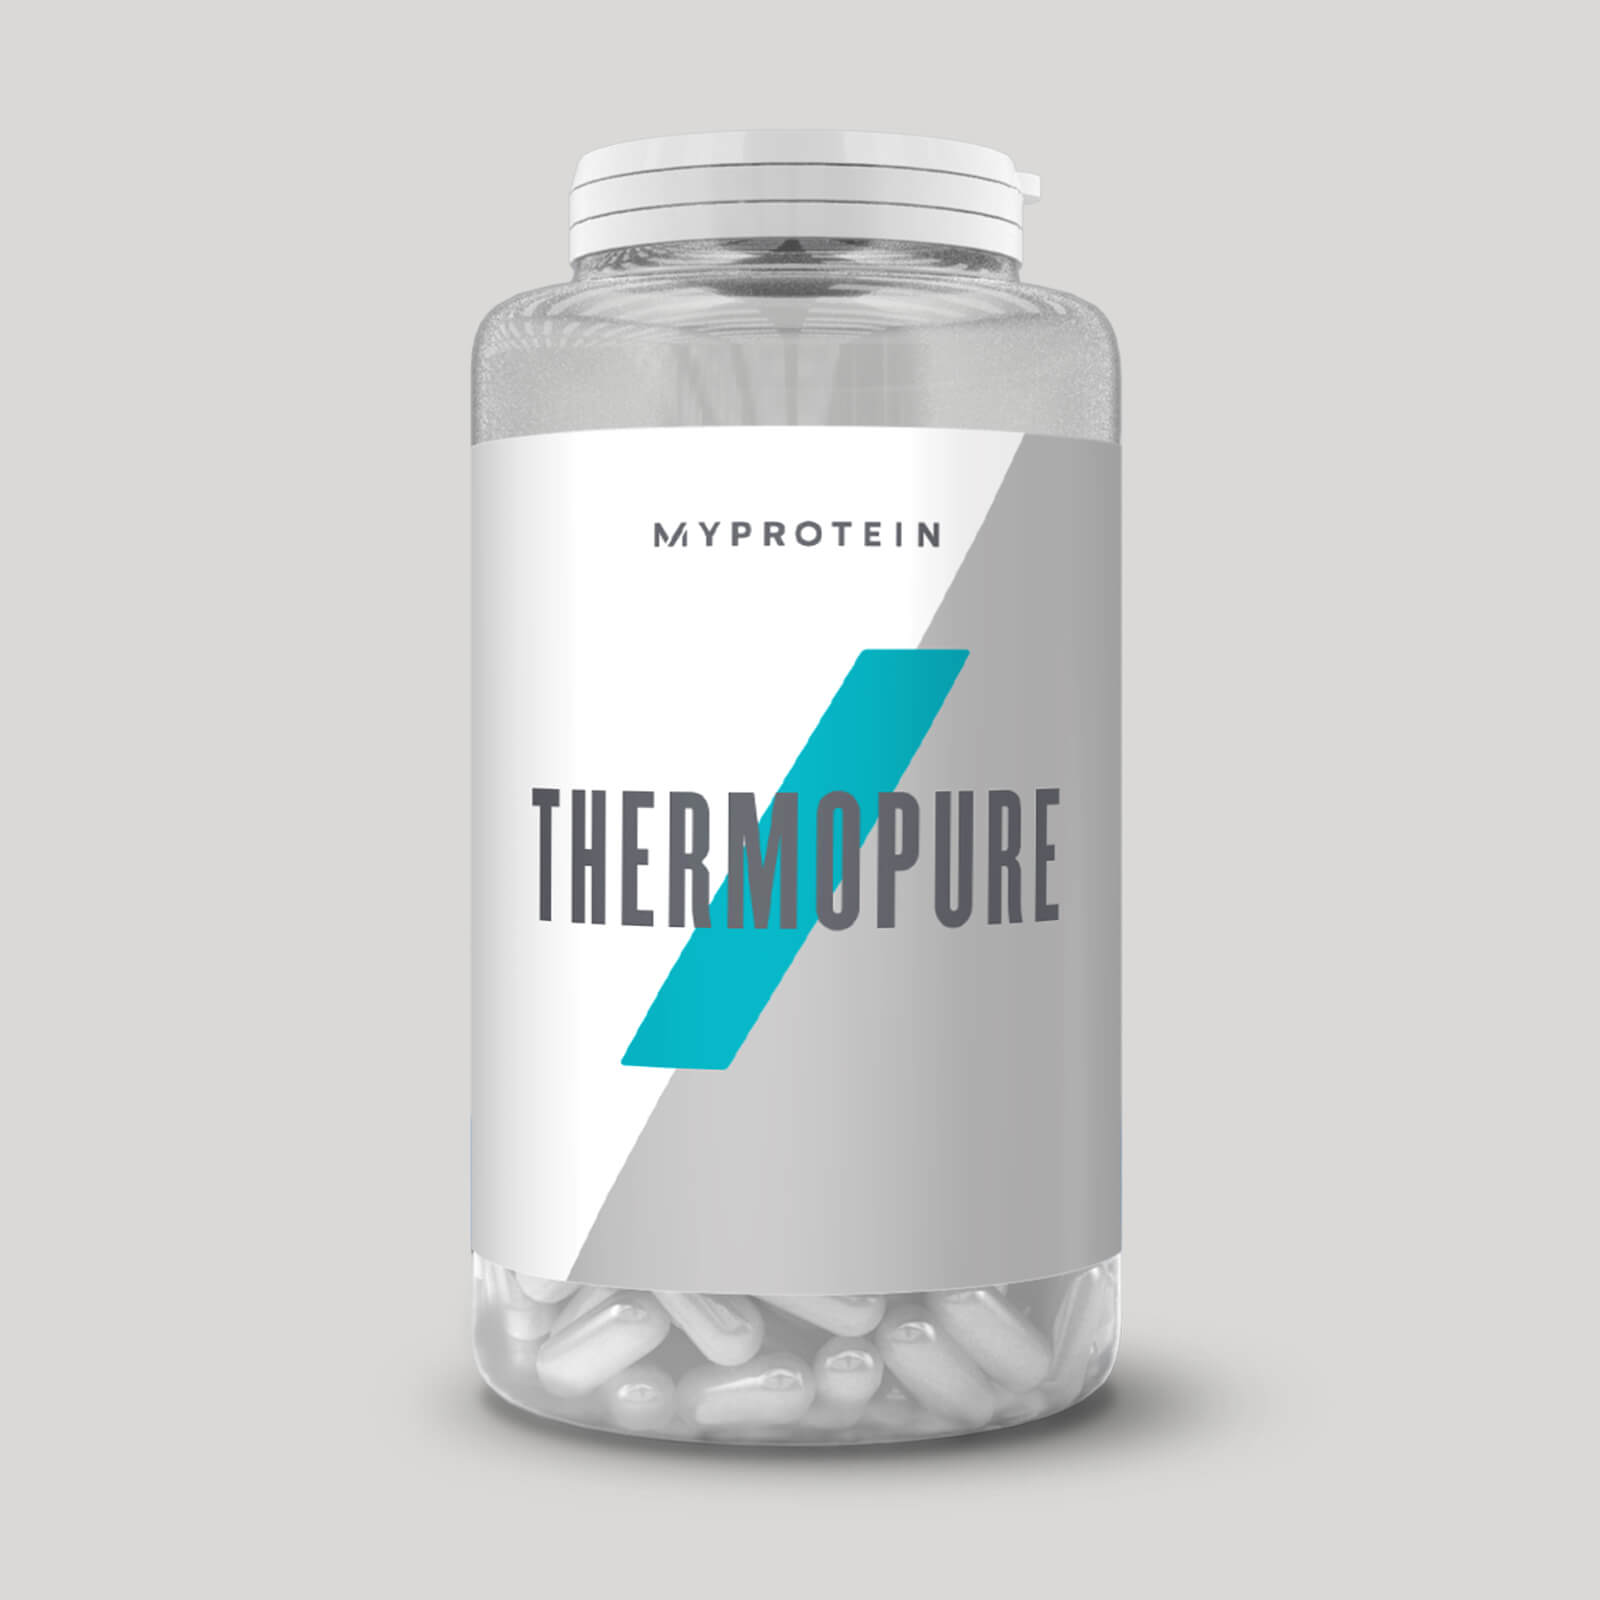 Myprotein Thermopure - 180Capsules - Naturel